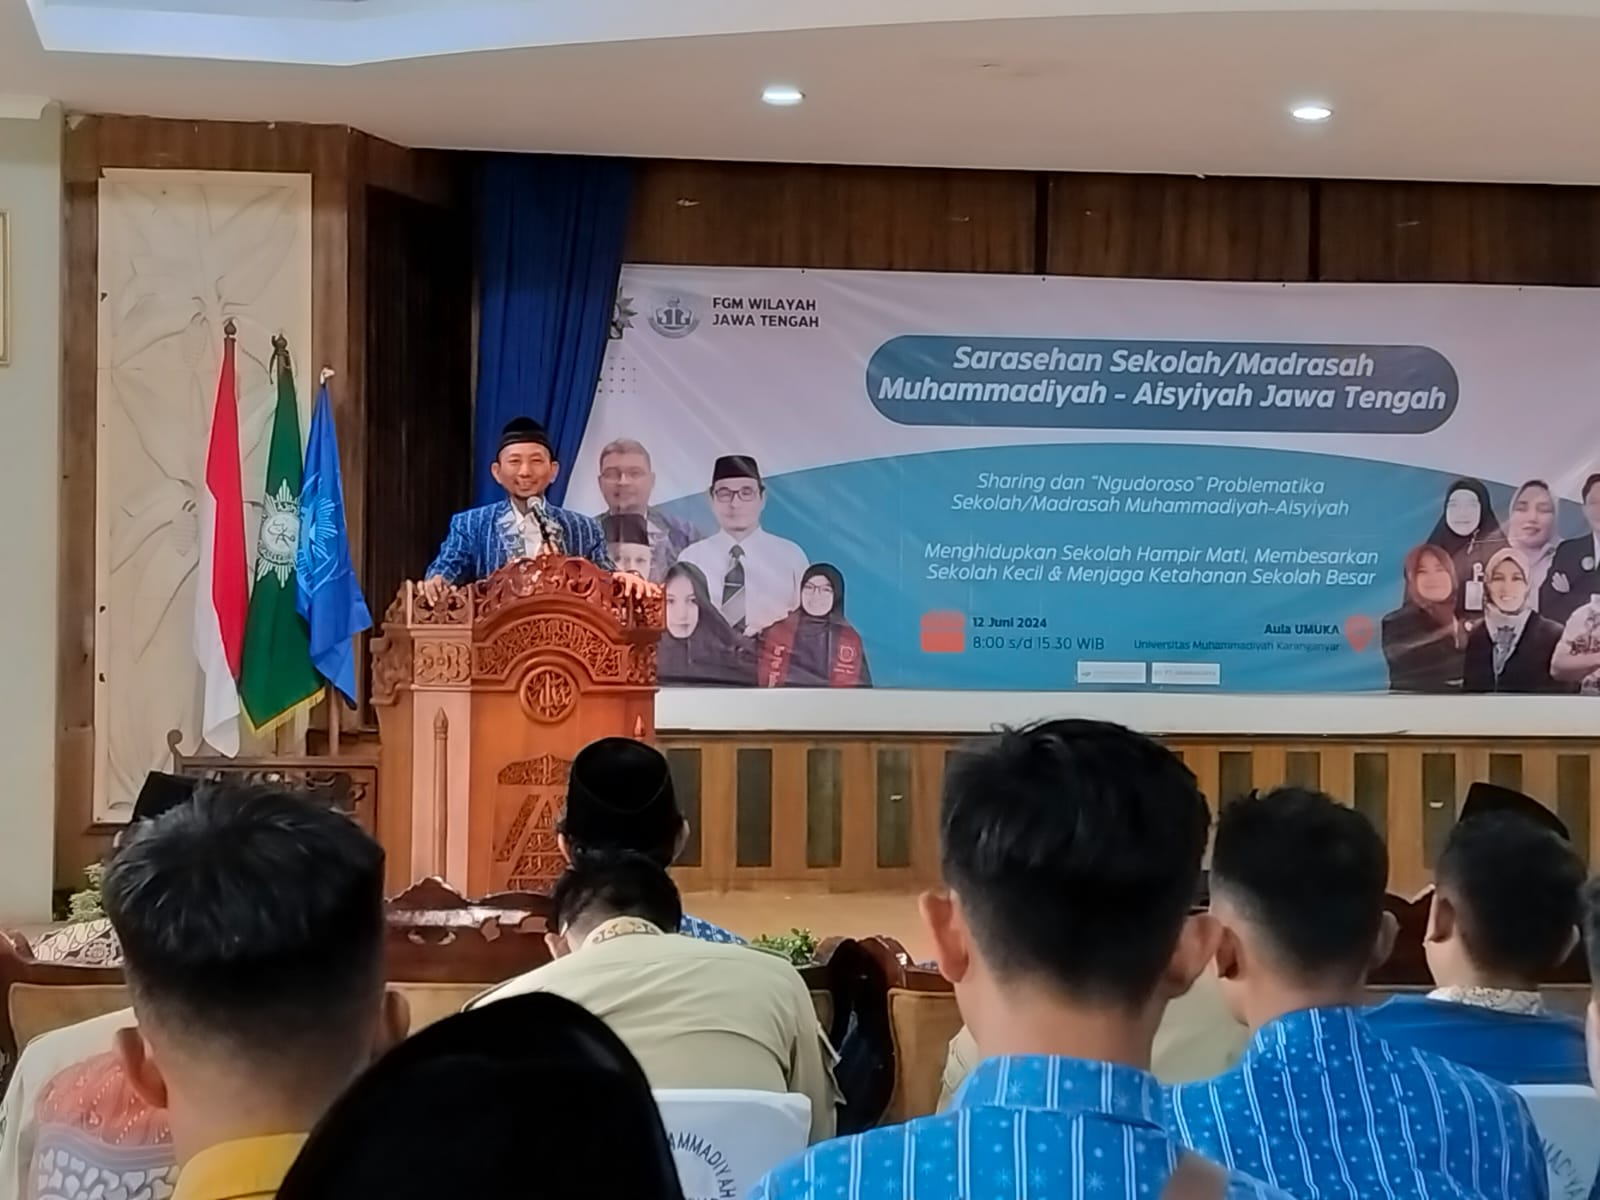 Sarasehan Sekolah dan Madrasah Muhammadiyah Aisyiyah se-Jawa Tengah